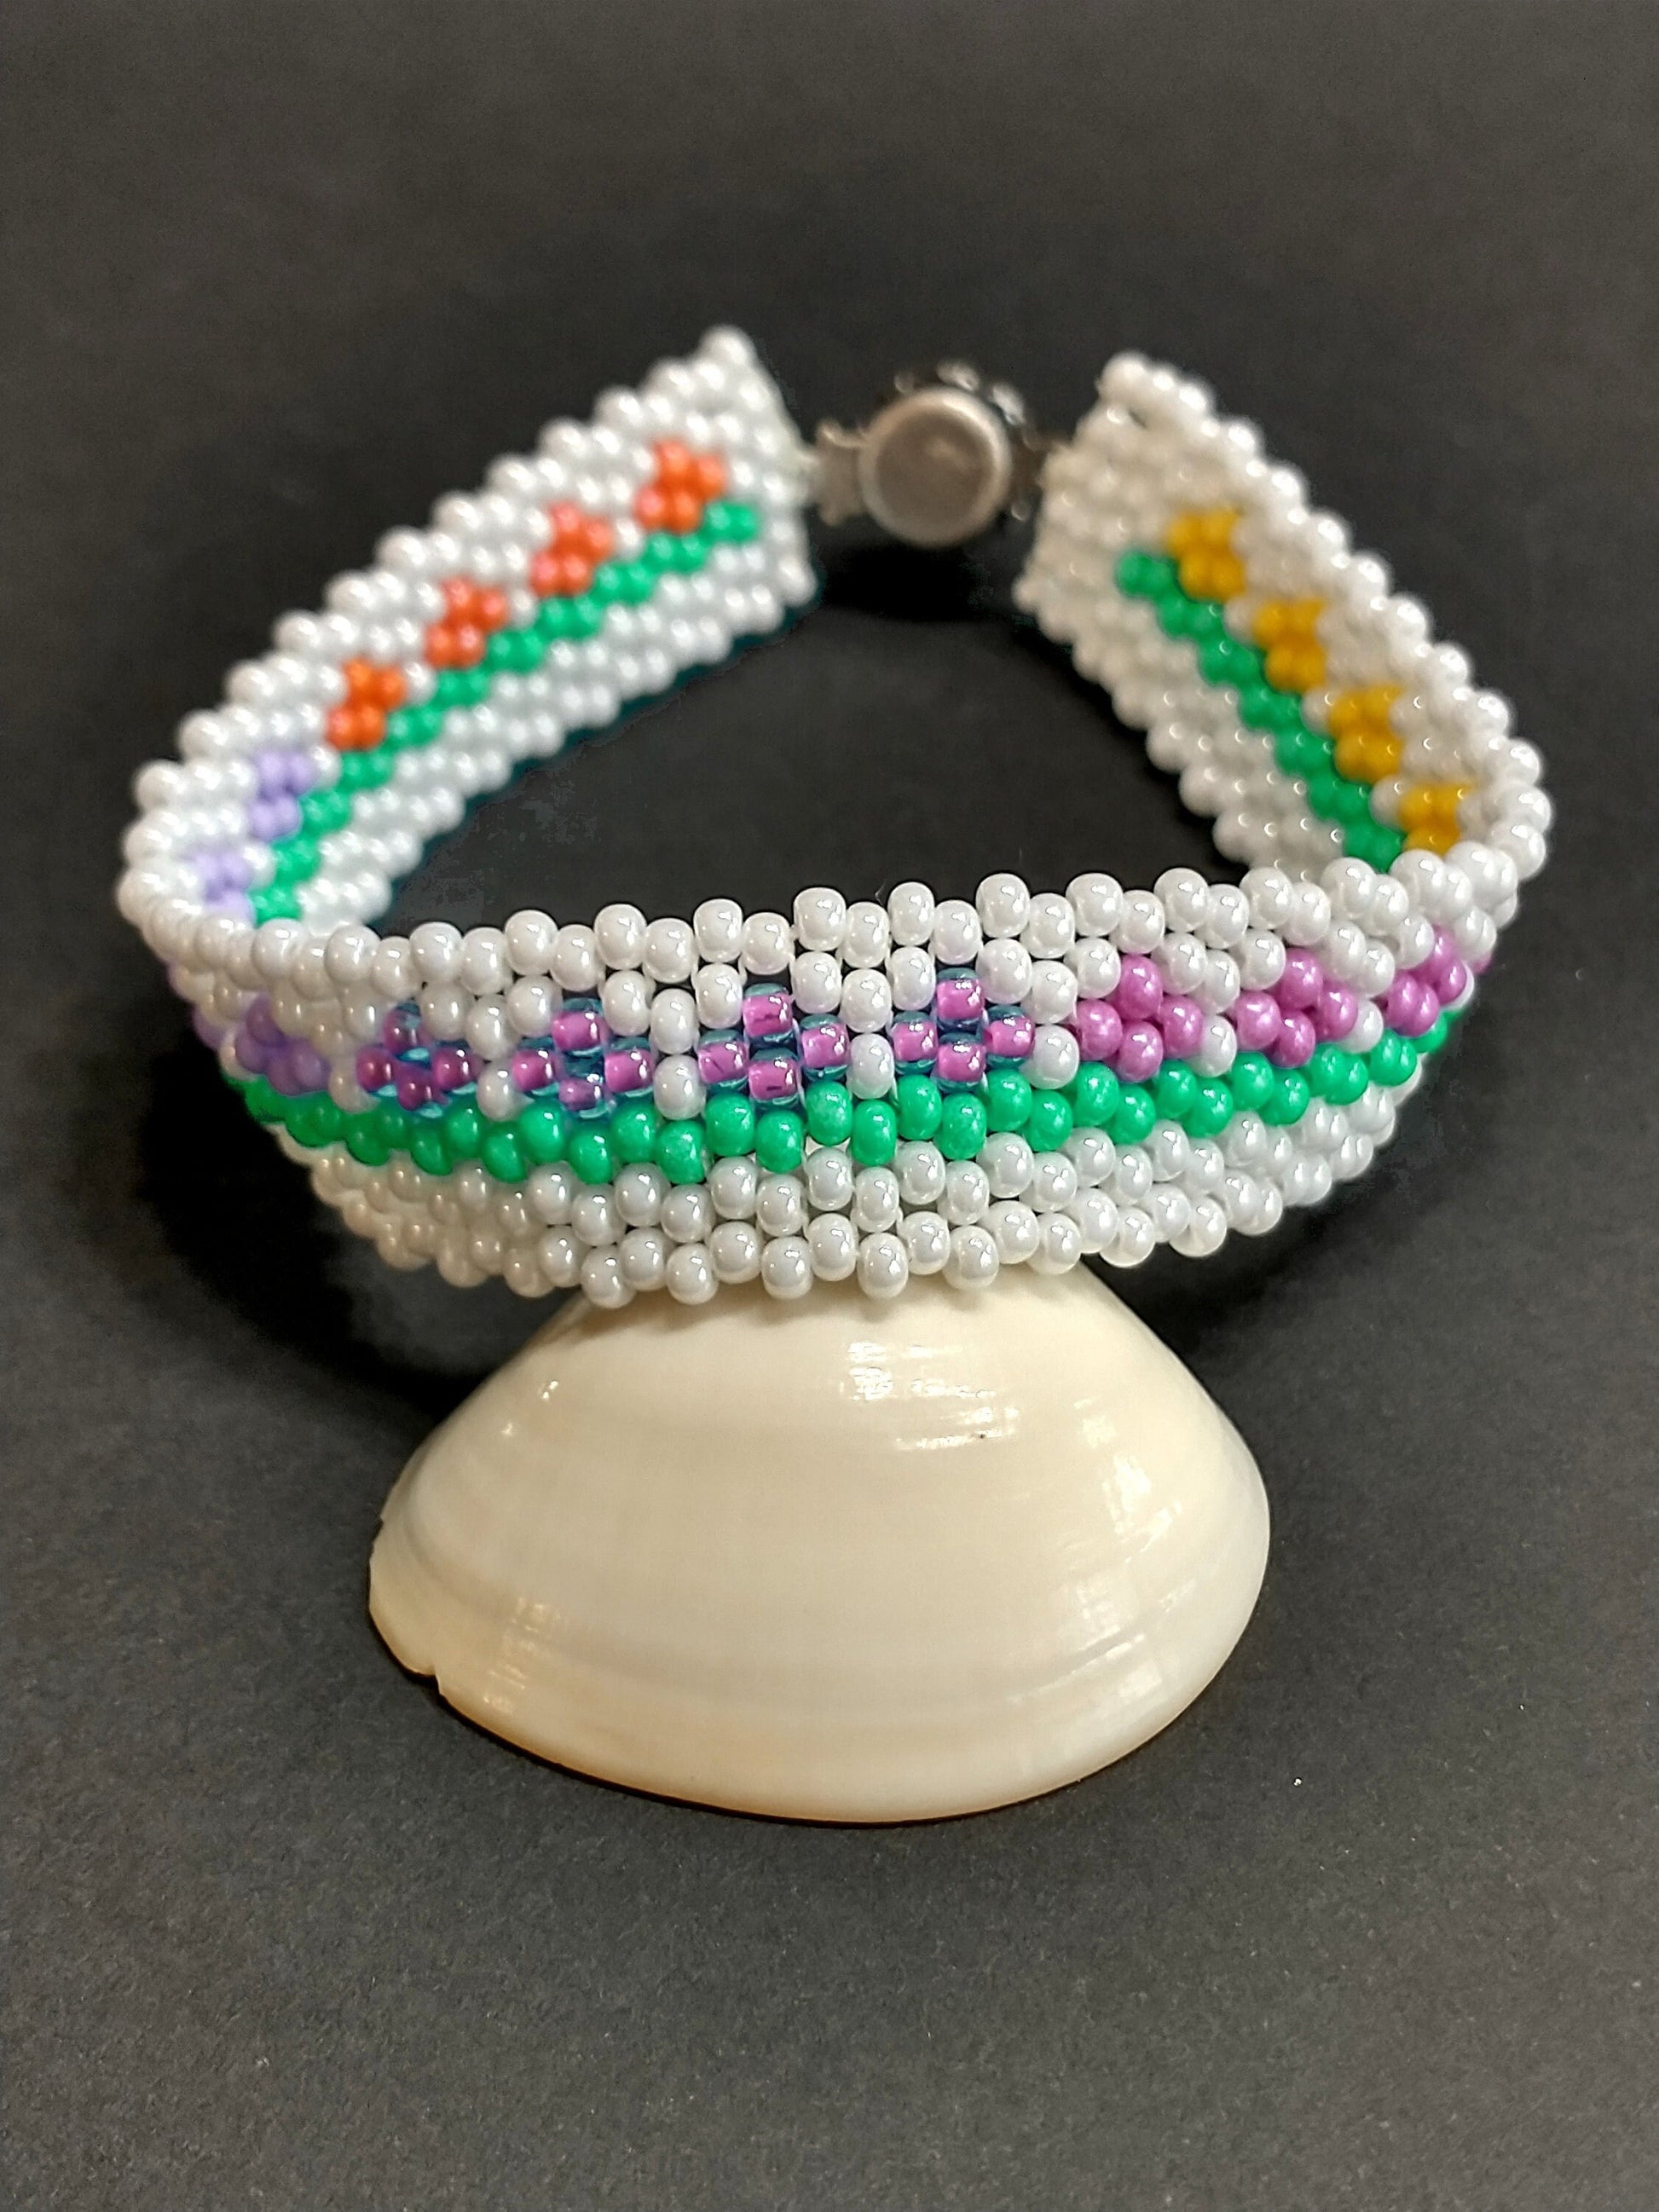 Pastel Flower Seed Bead Bracelet | Handmade PNW Jewelry | Tiny Glass Bead Cuff Bracelet | Indie Boho Jewelry Gift For Women | Handmade USA